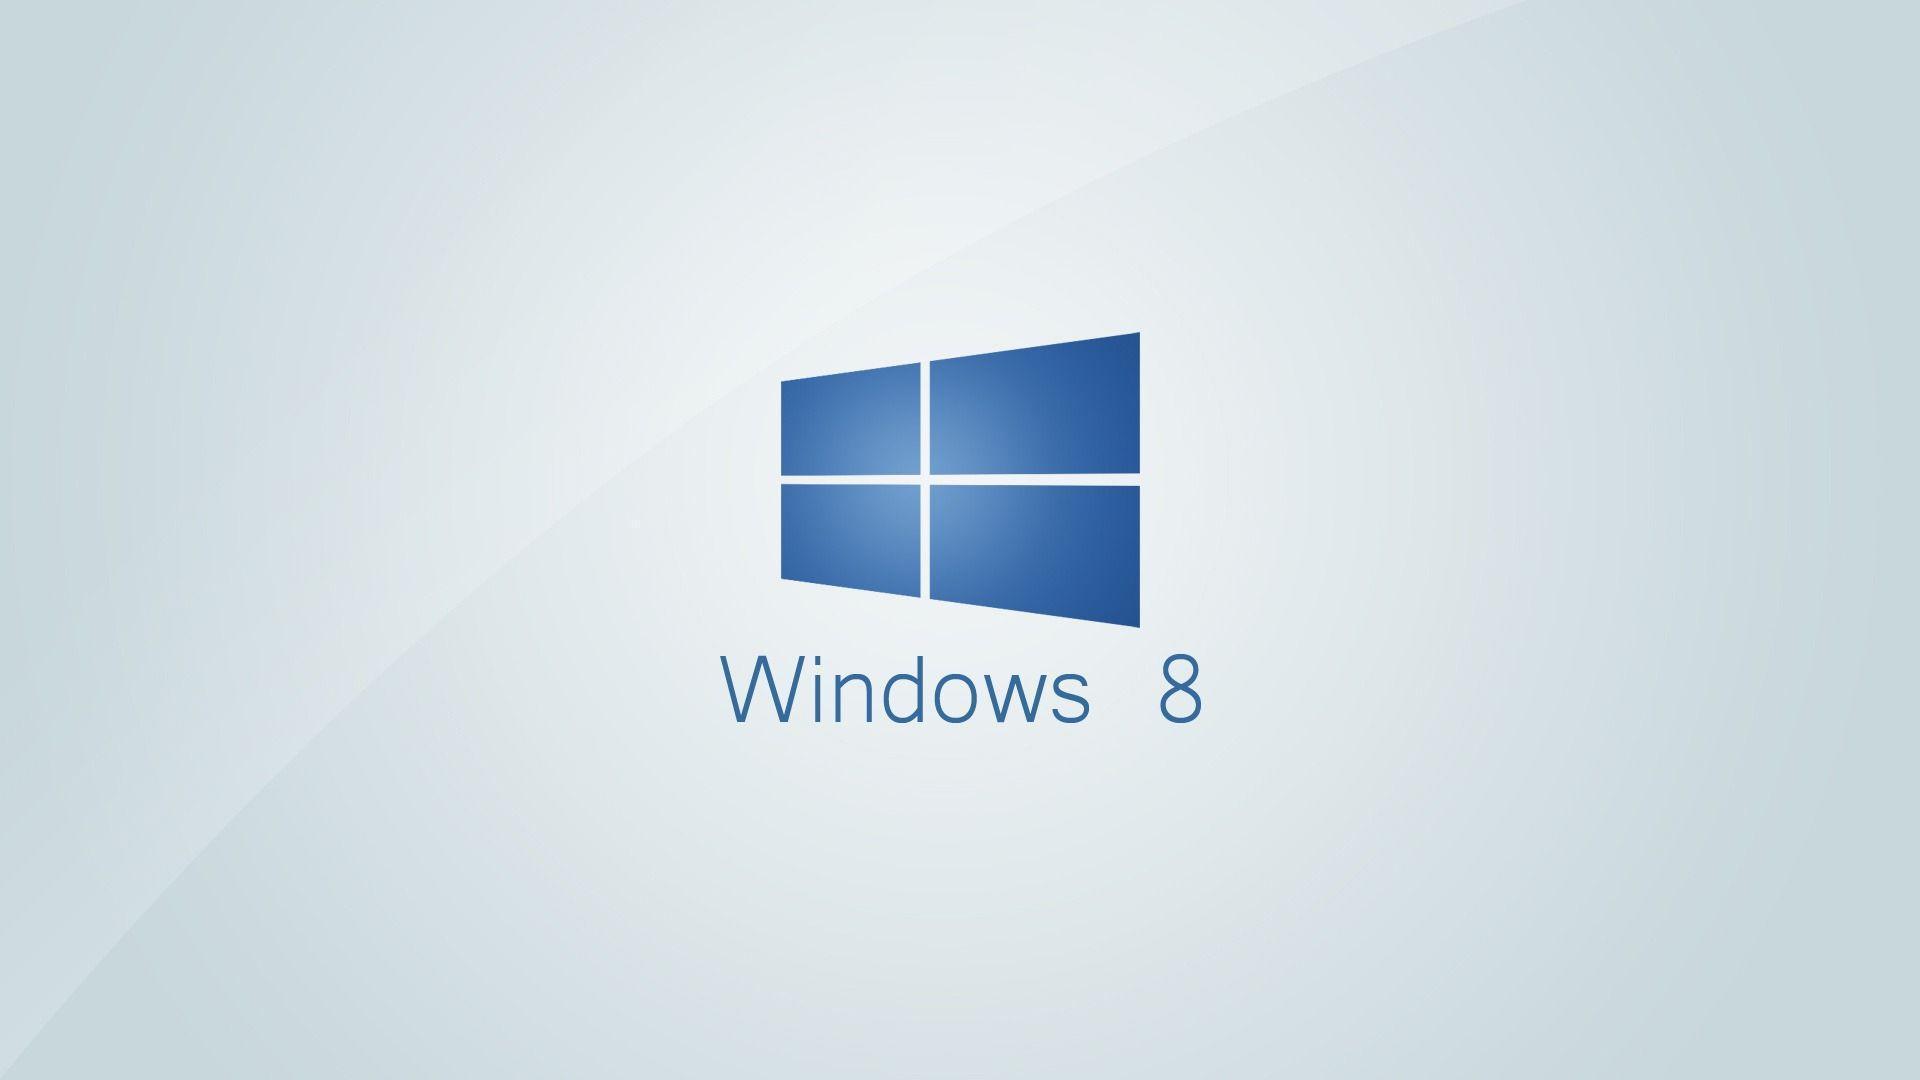 Windows 8 Wallpaper 1920x1080 6